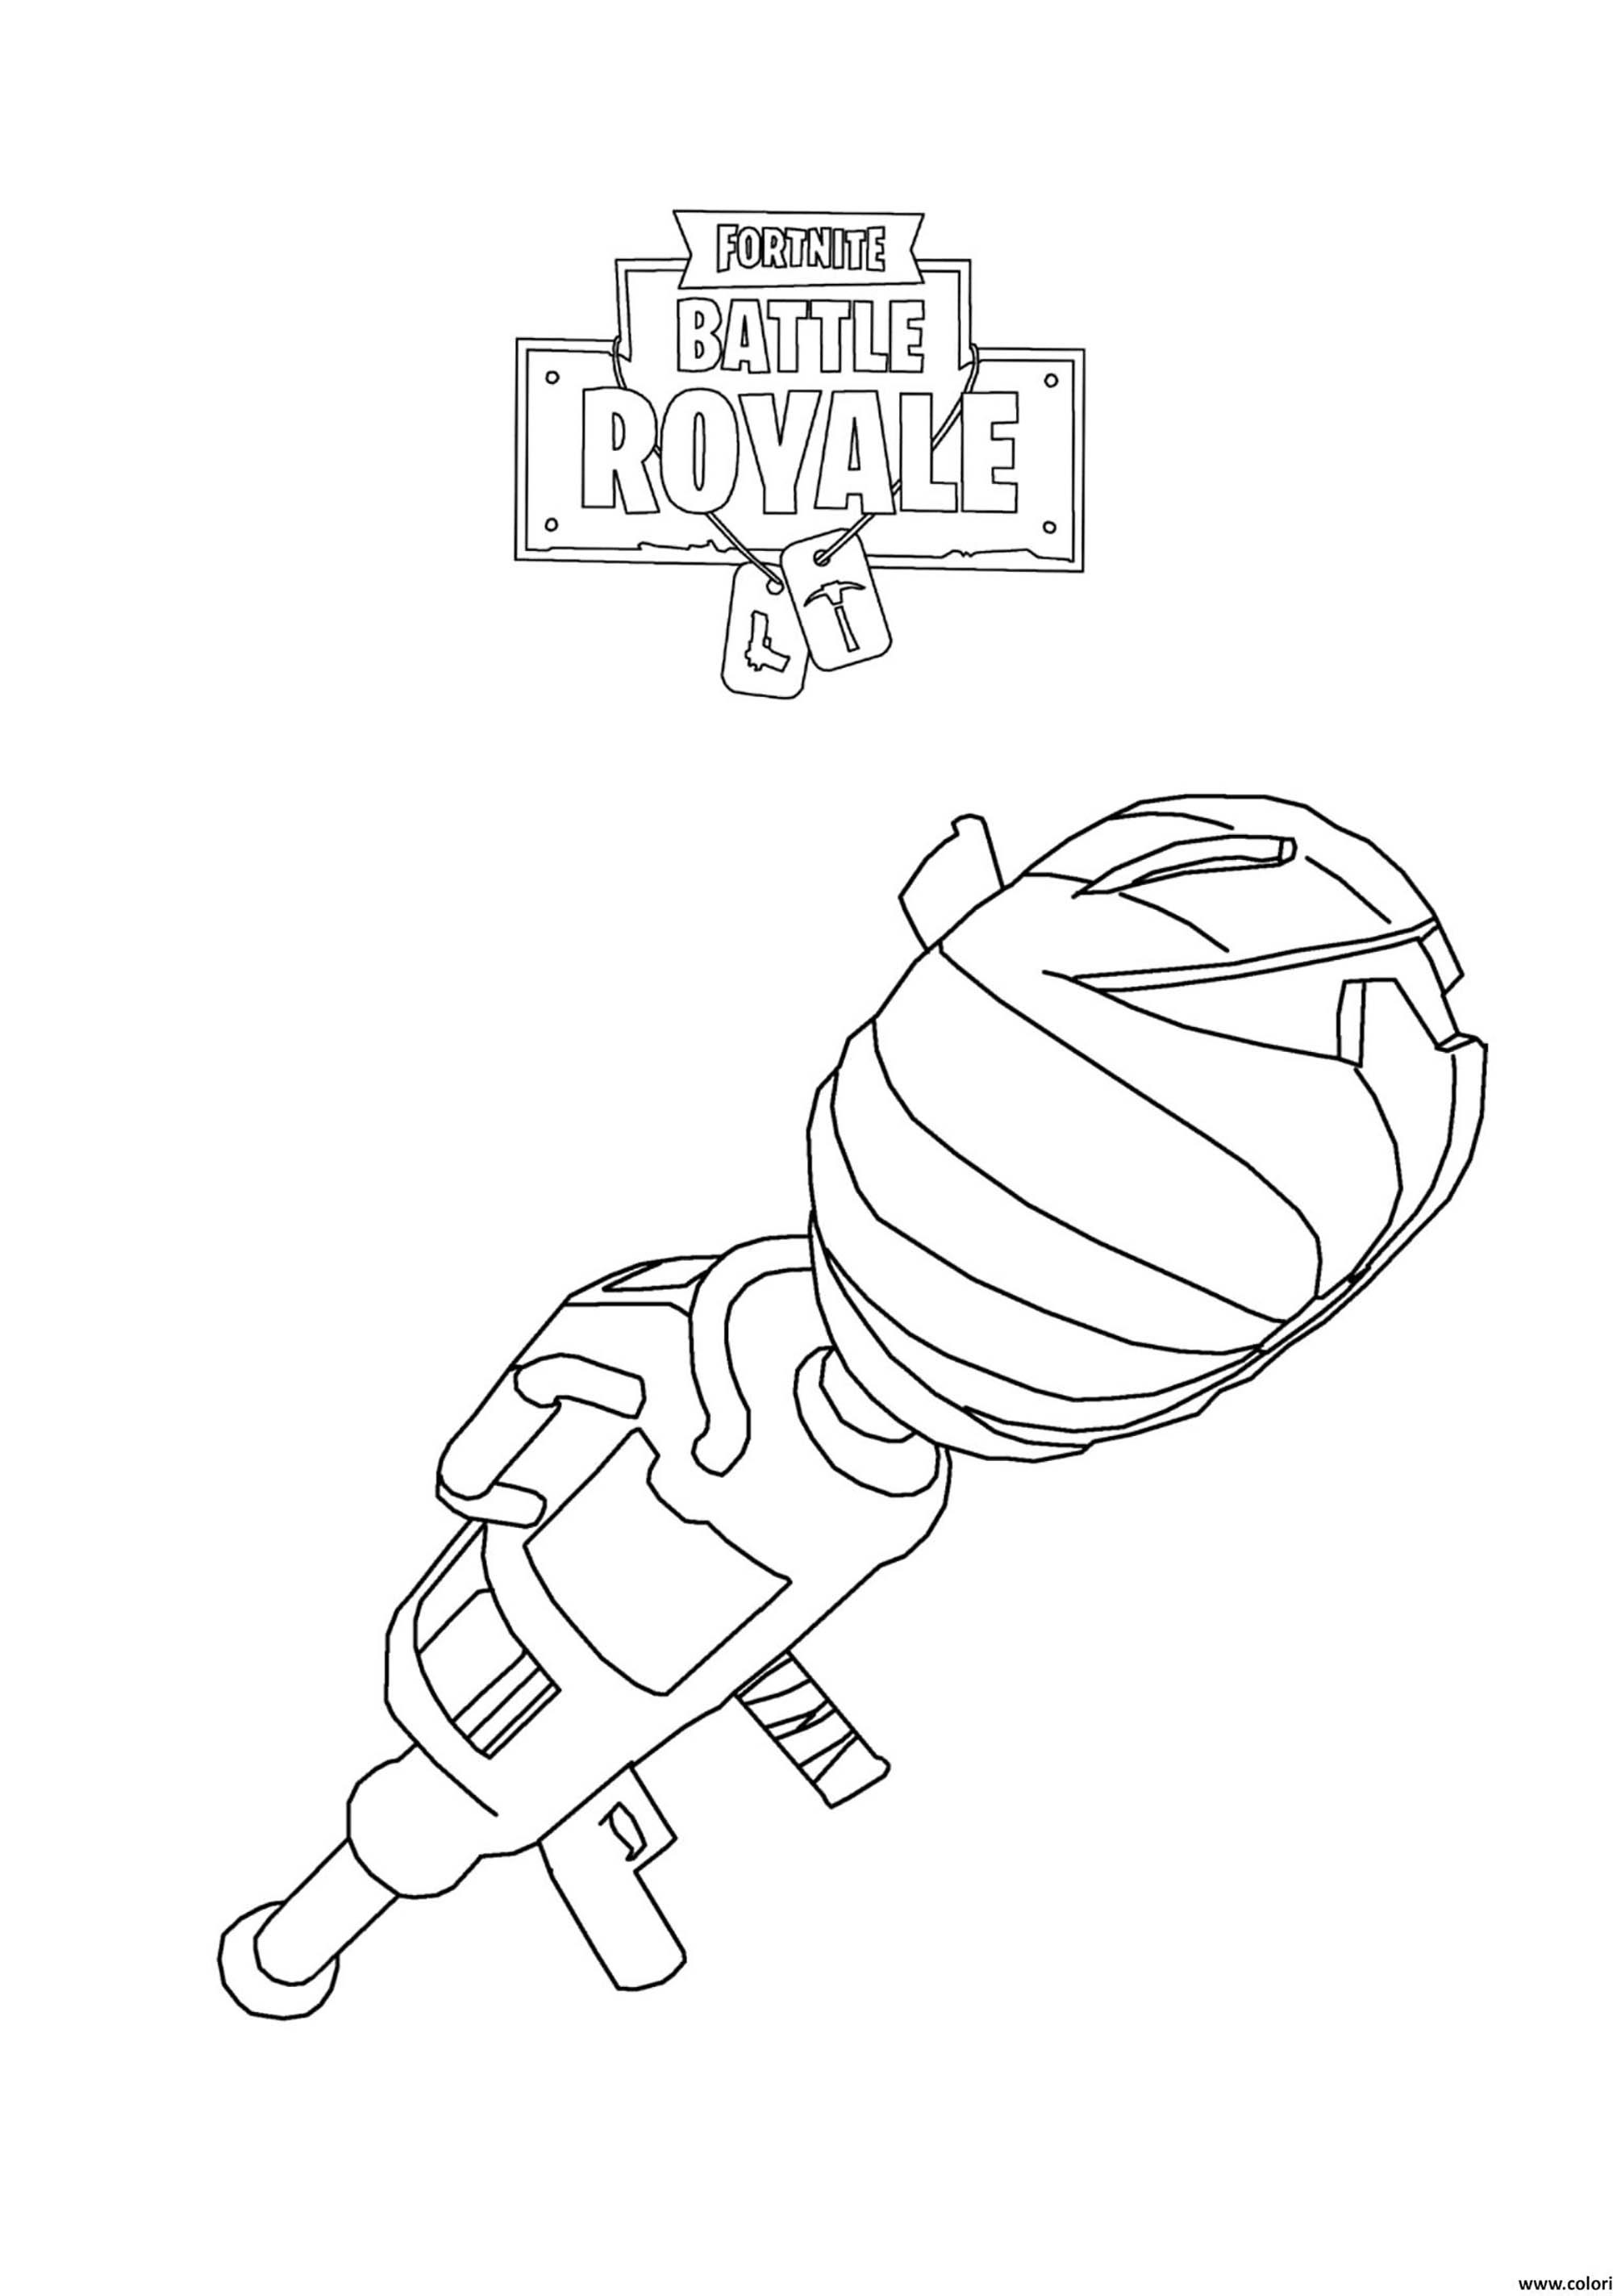 Coloring Fortnite Battle Royale Logo - Fortnite Battle Royale : Rocket Launcher Battle Royale